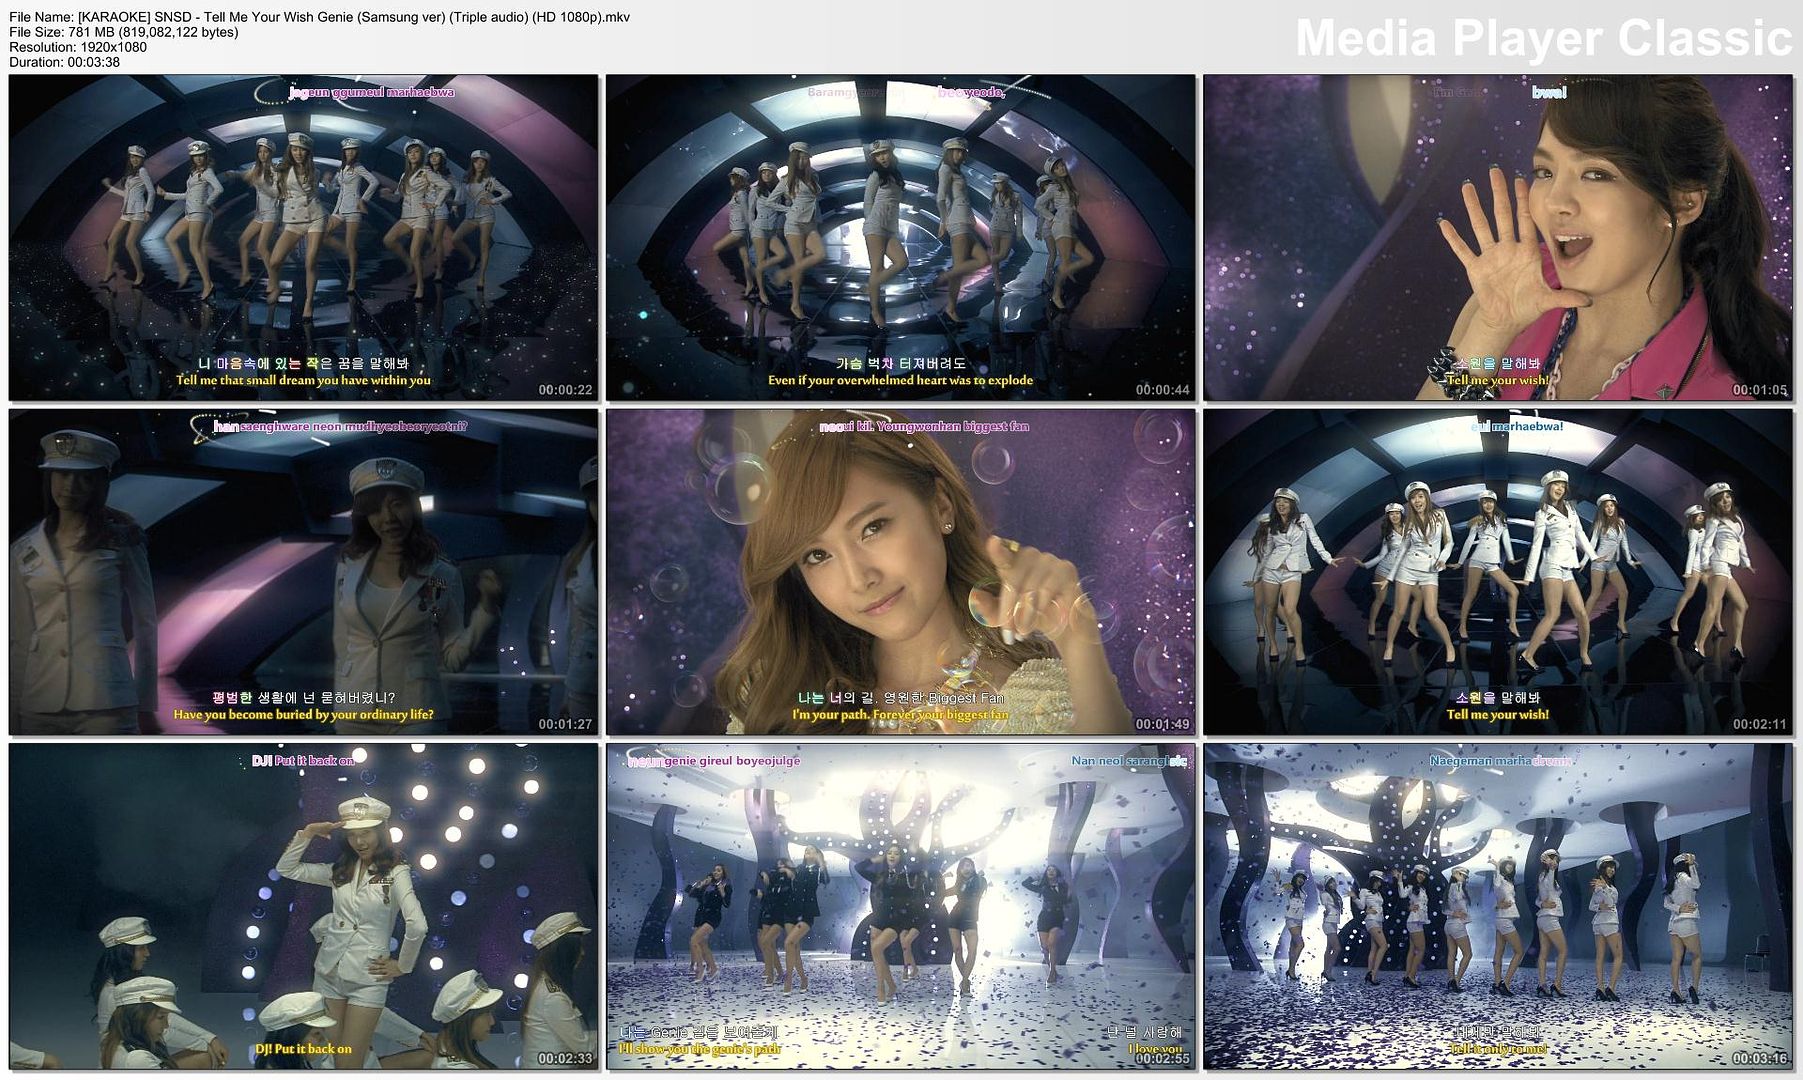 [karaoke] Girls’ Generation Snsd Tell Me Your Wish Genie Samsung Ver Triple Audio Bd